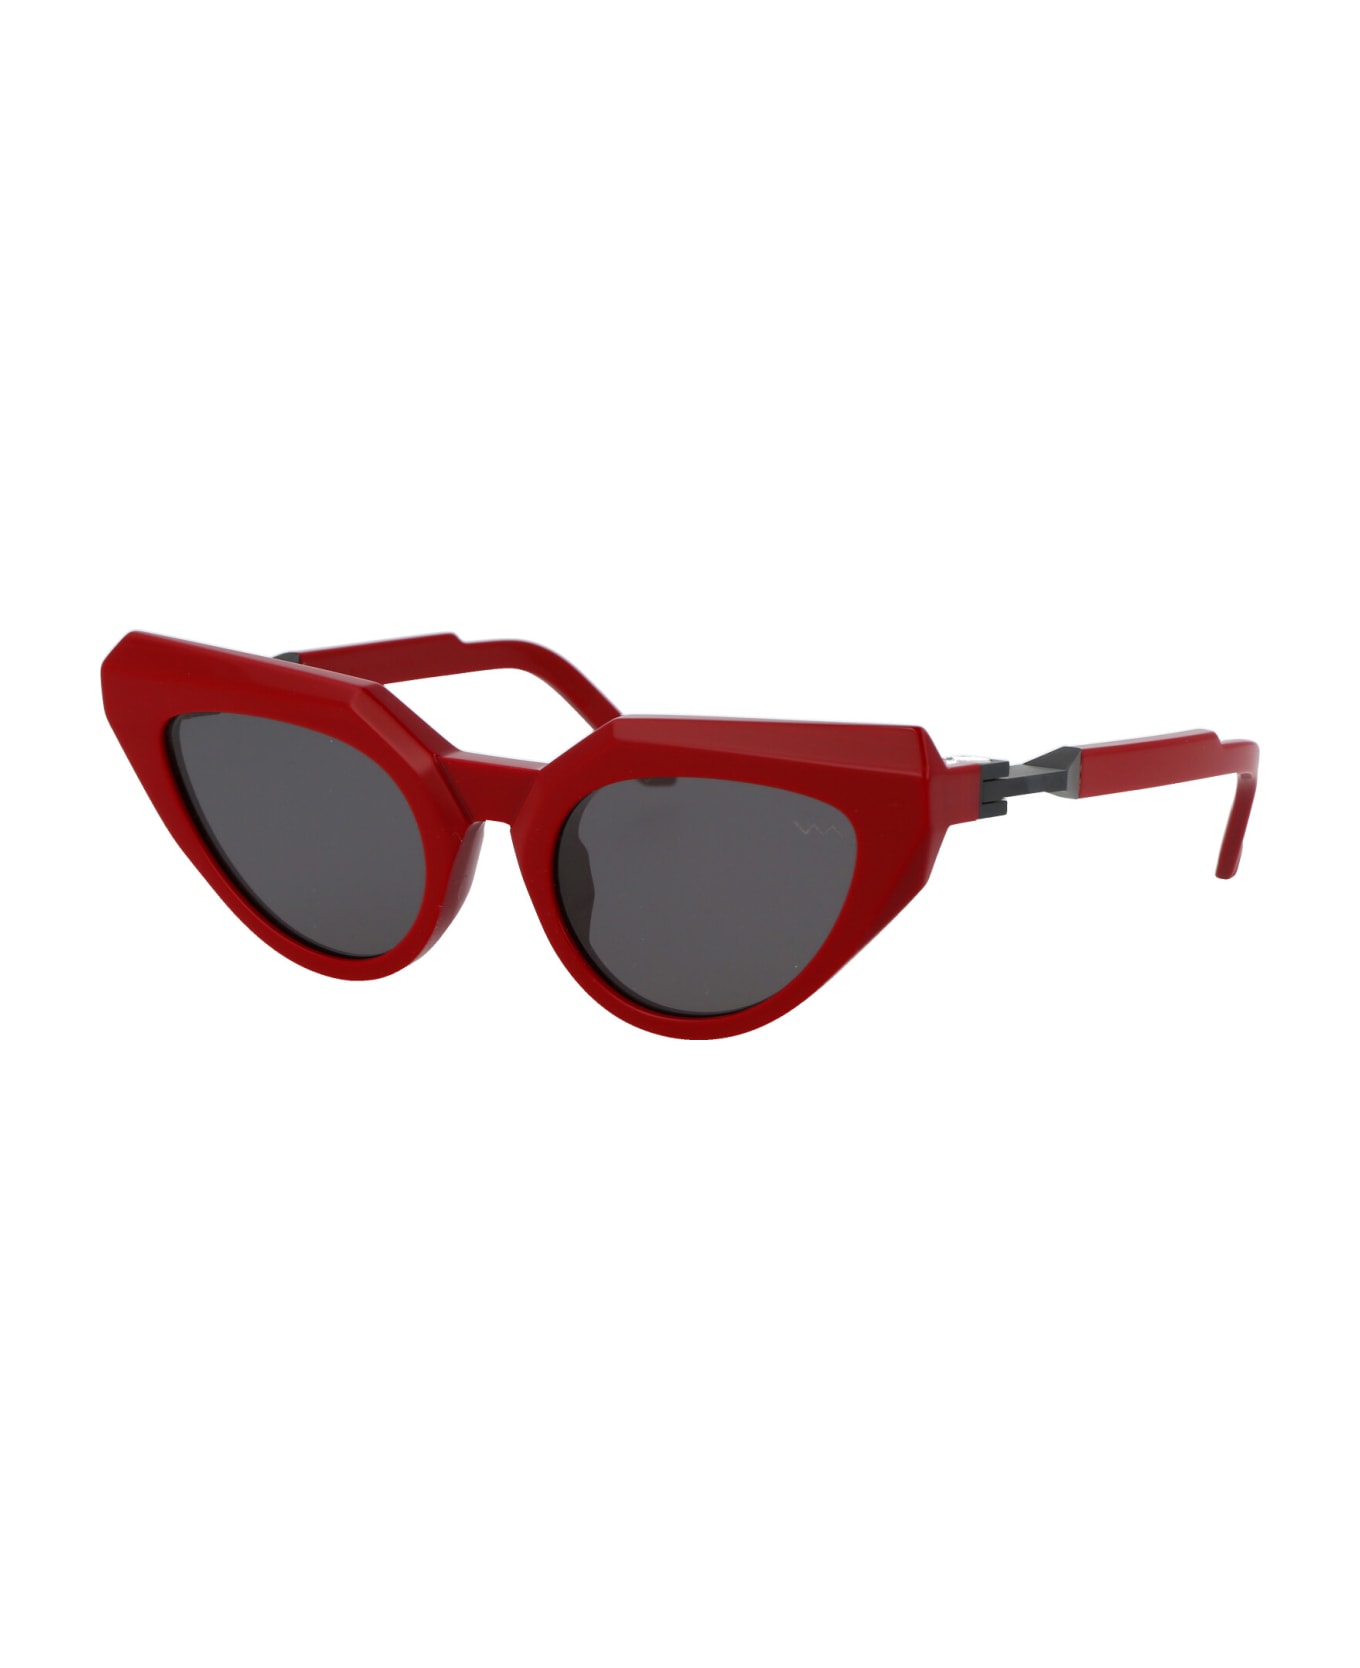 VAVA Bl0028 Sunglasses - RED|BLACK FLEX HINGES|BLACK LENSES